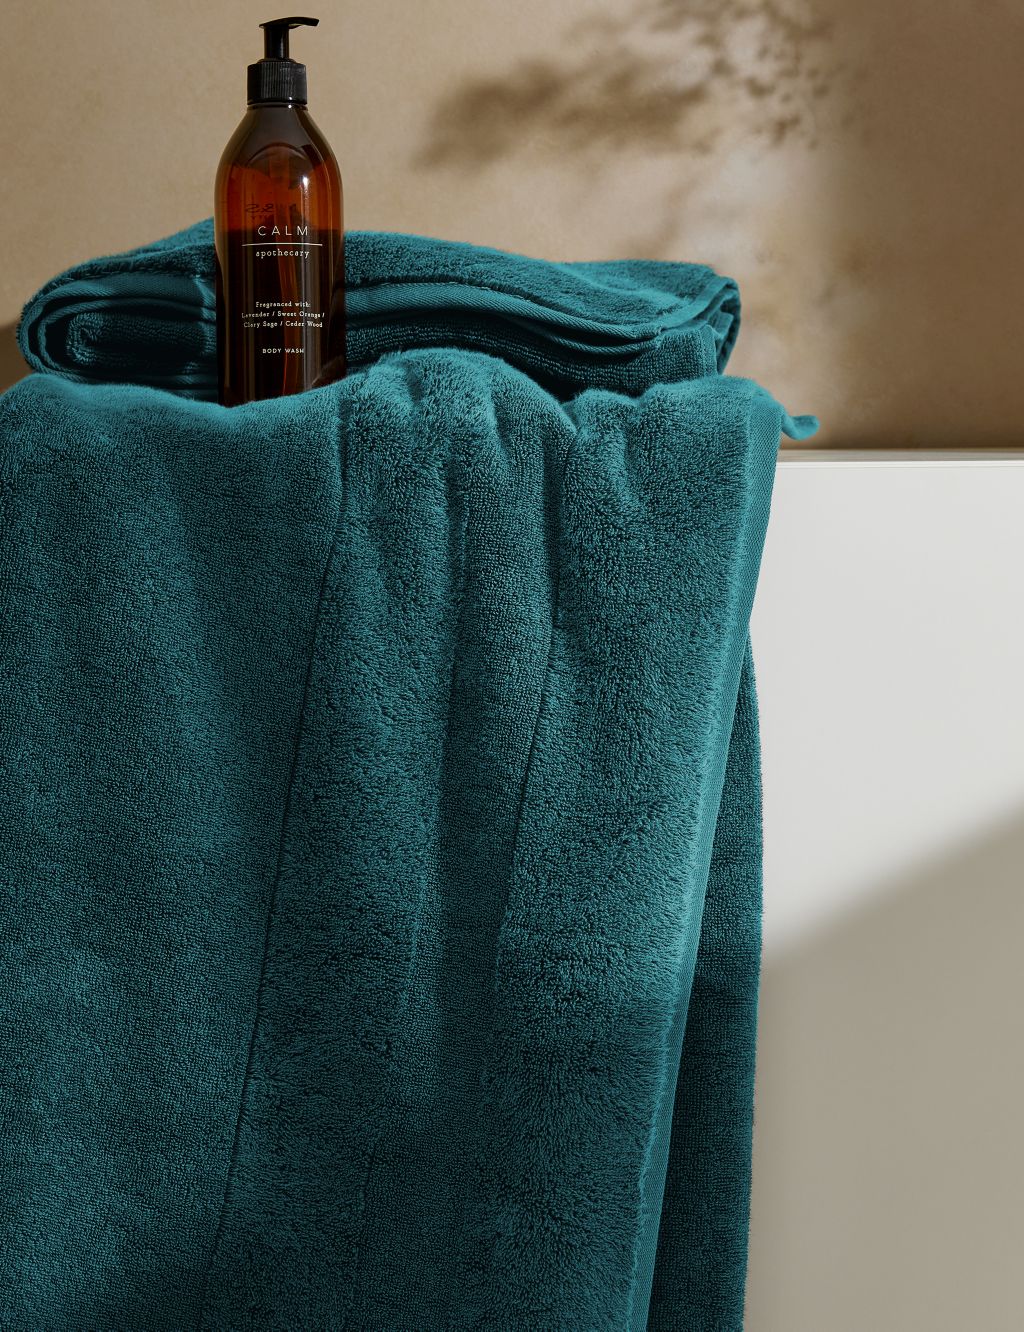 Ultimate Turkish Luxury Cotton Towel image 1